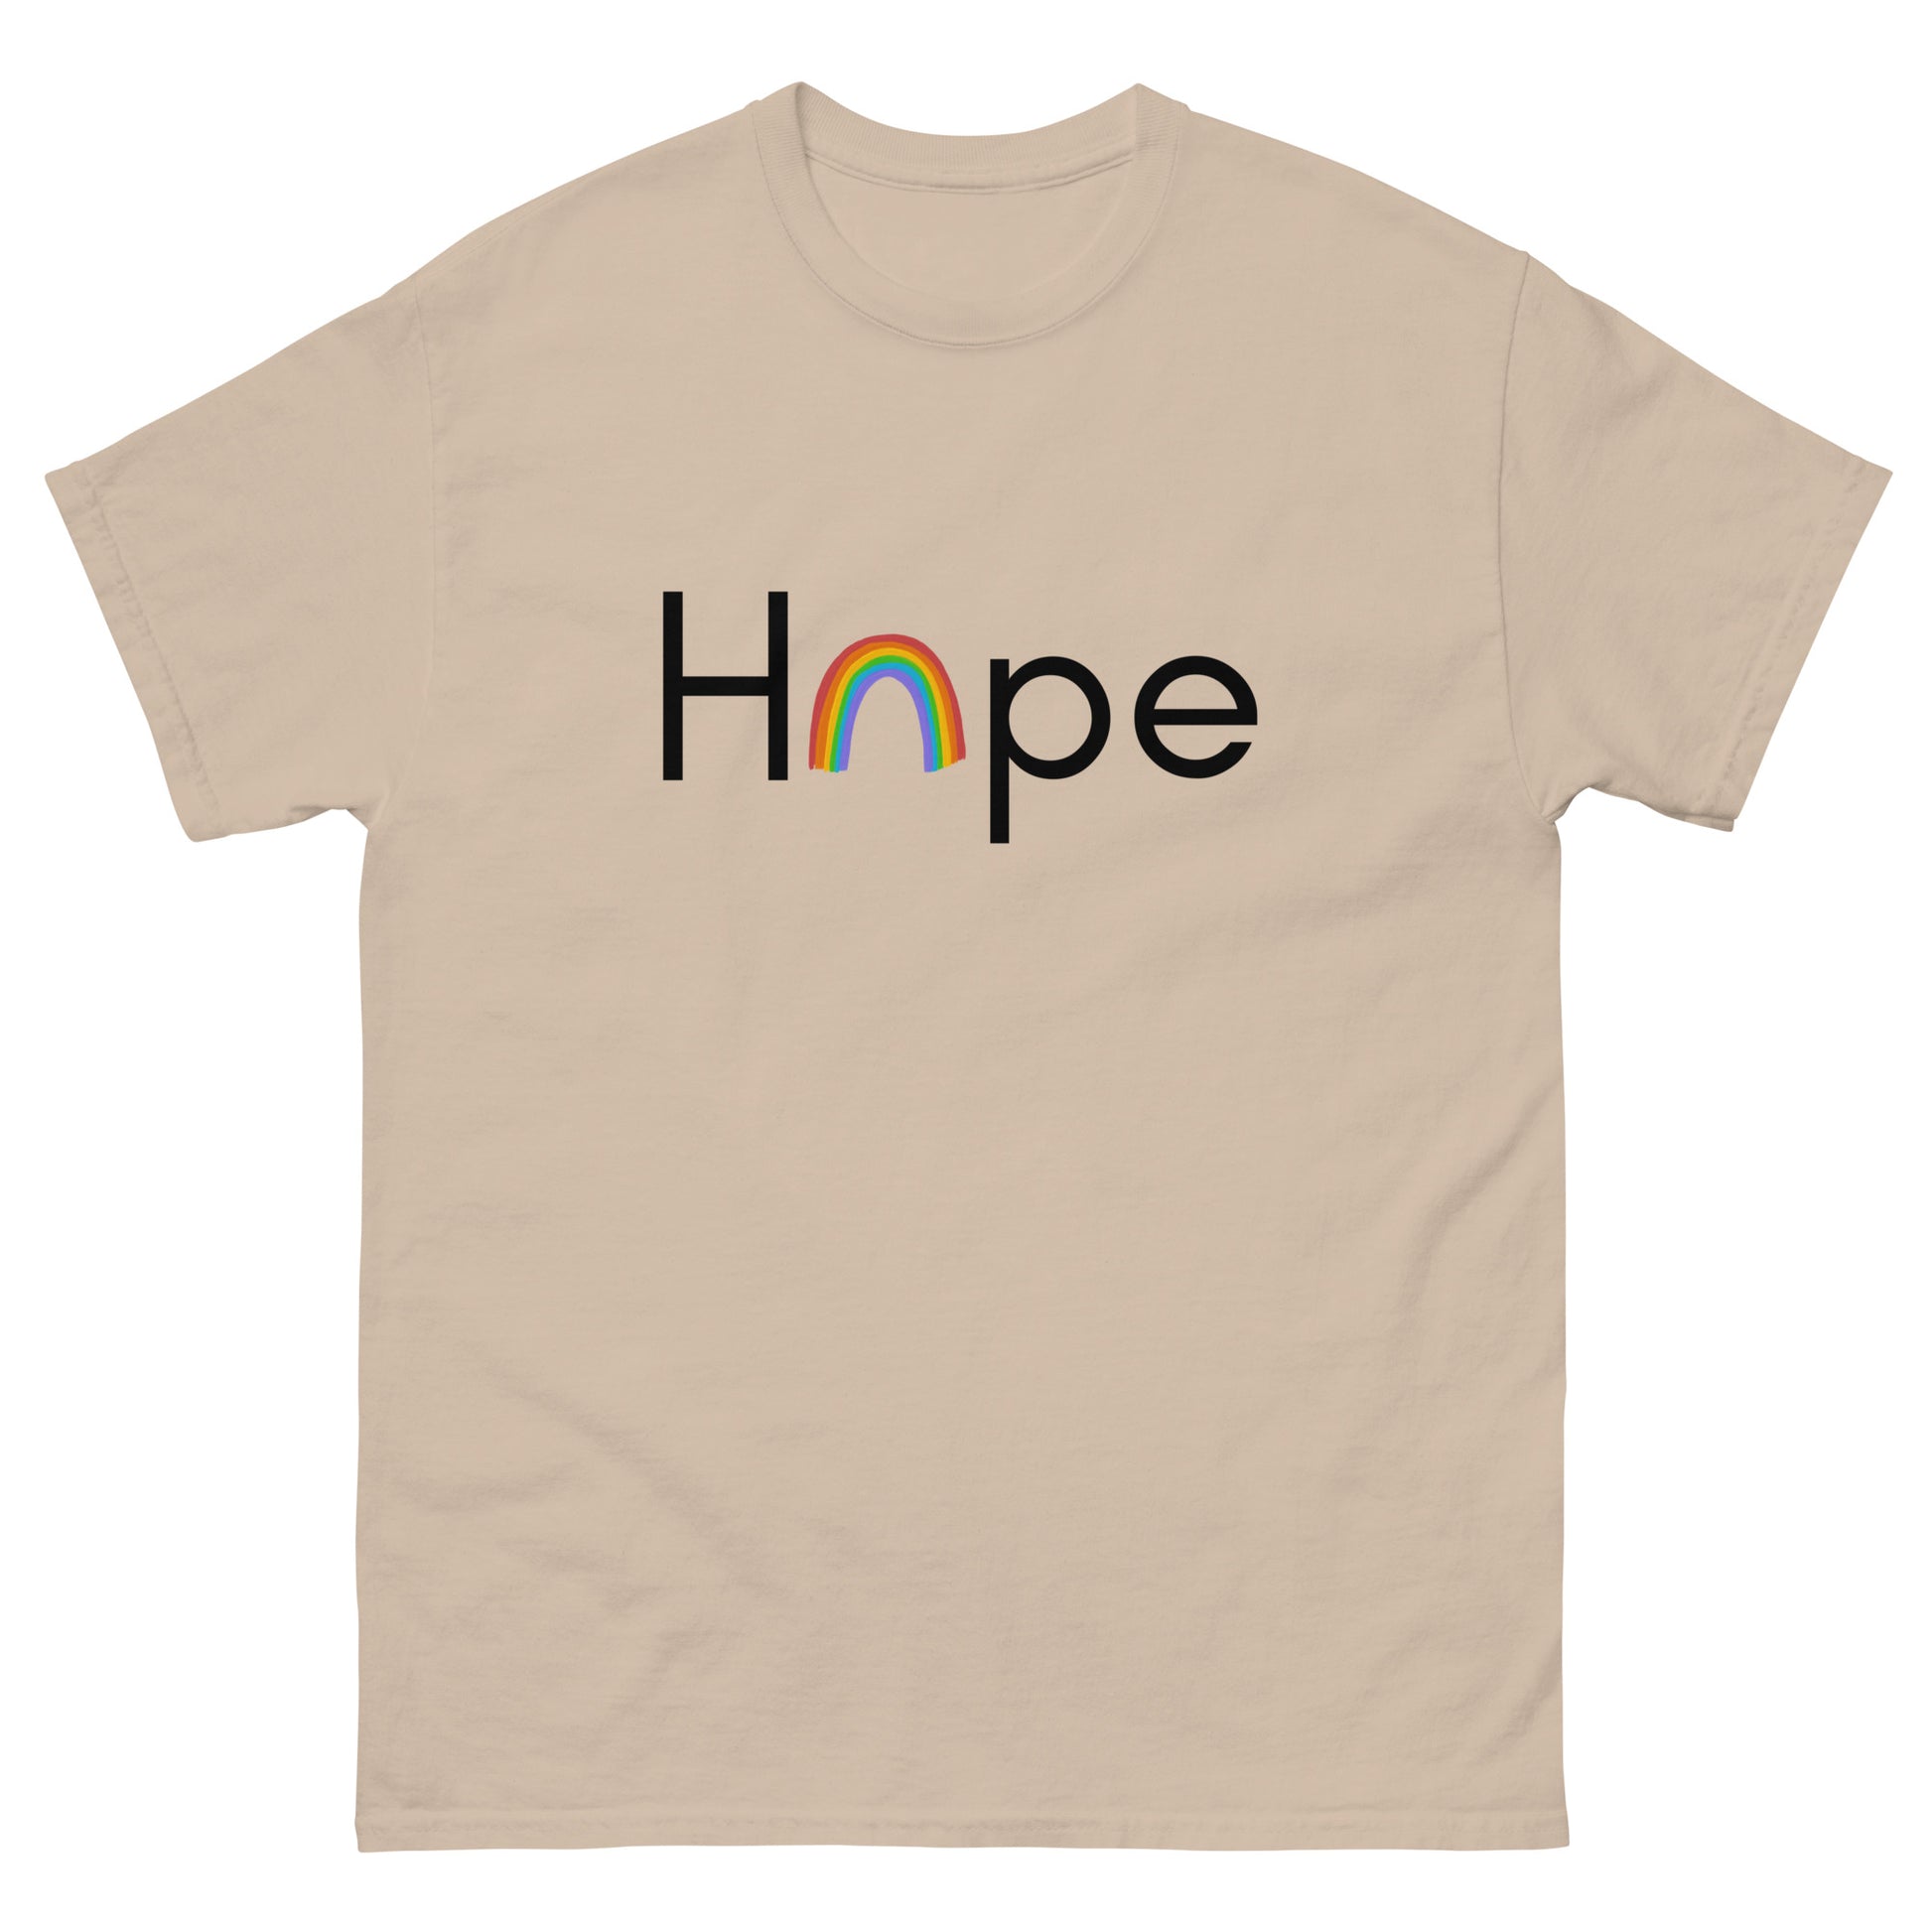 Hope T-Shirt - The Good Life Vibe